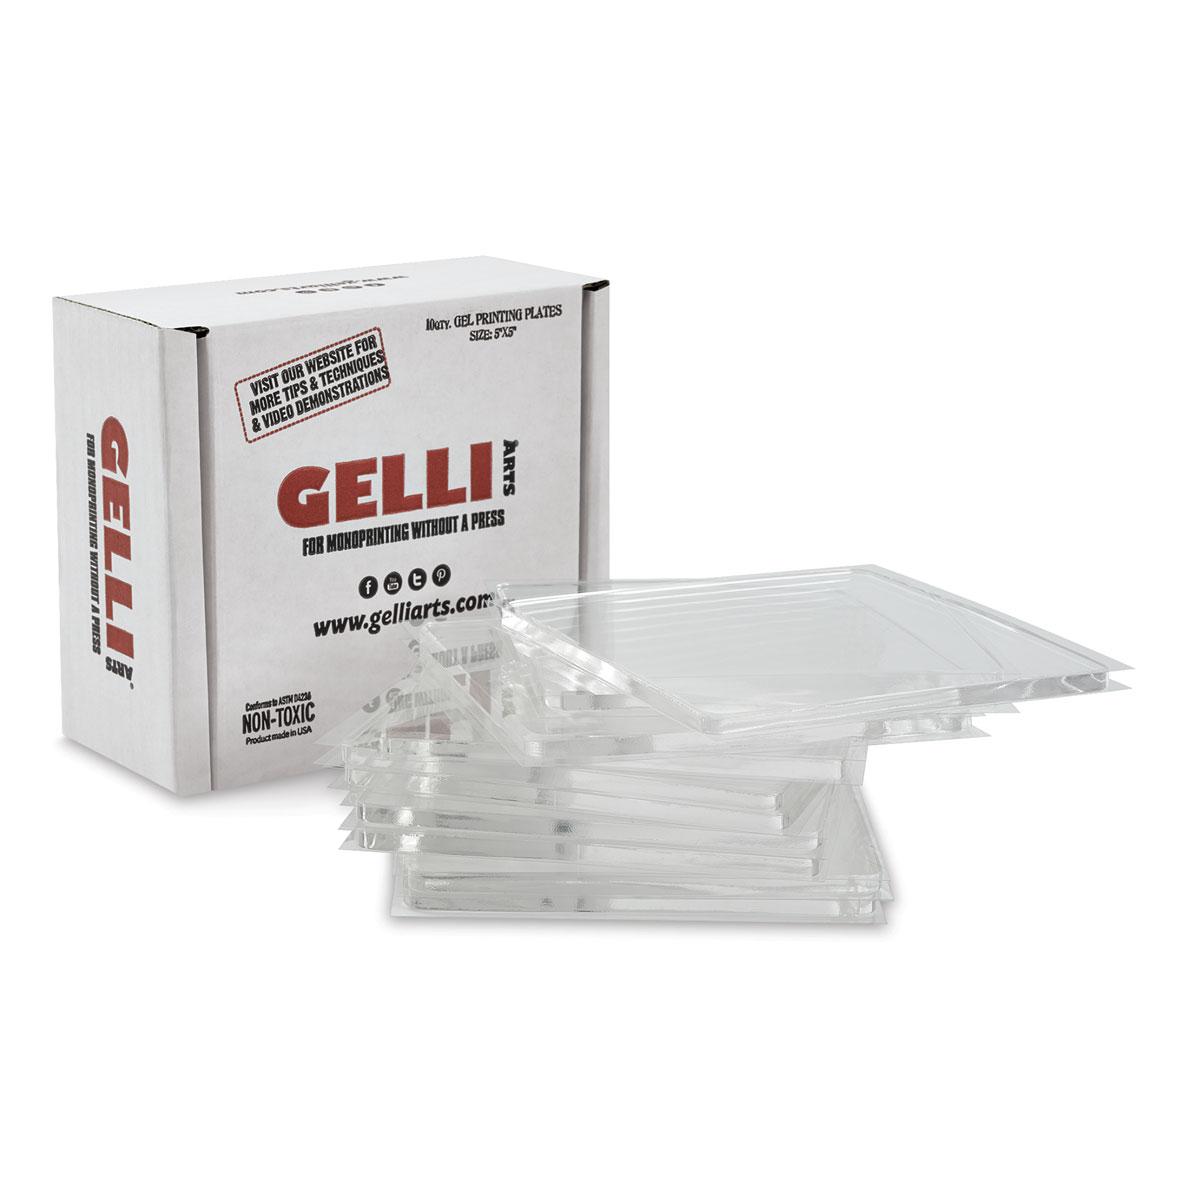 Gelli Gel Print Plate 8x10 - Wet Paint Artists' Materials and Framing